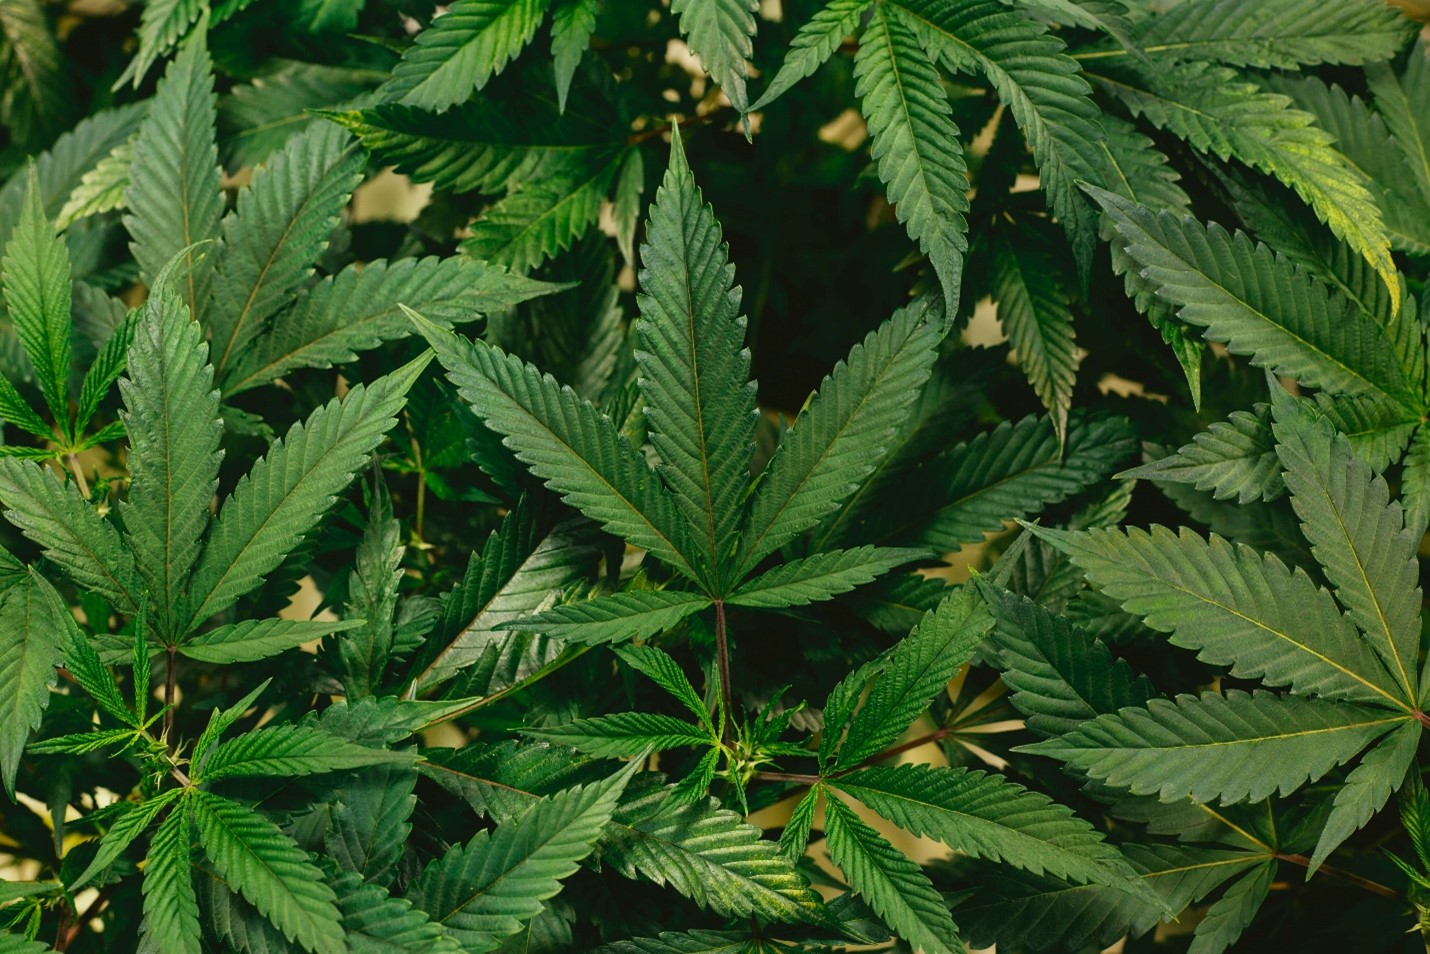 NJ recreational marijuana limits